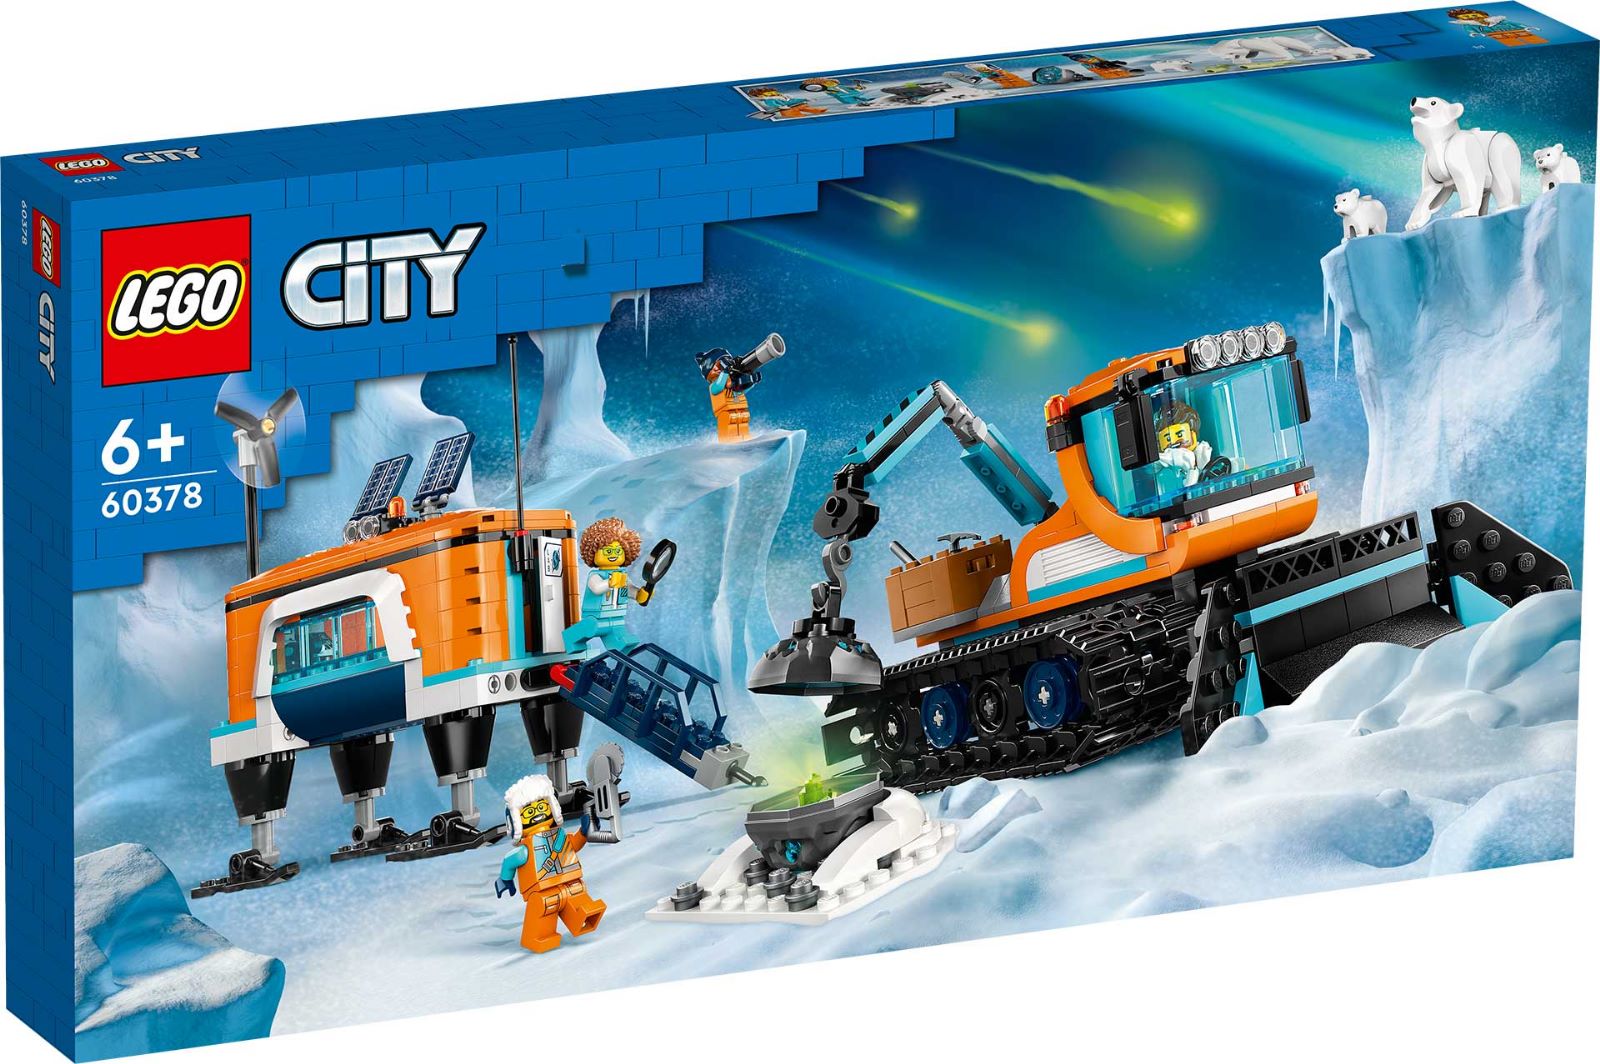 LEGO City 60378 Arktis Schneepflug Mit Mobilem Labor (1)